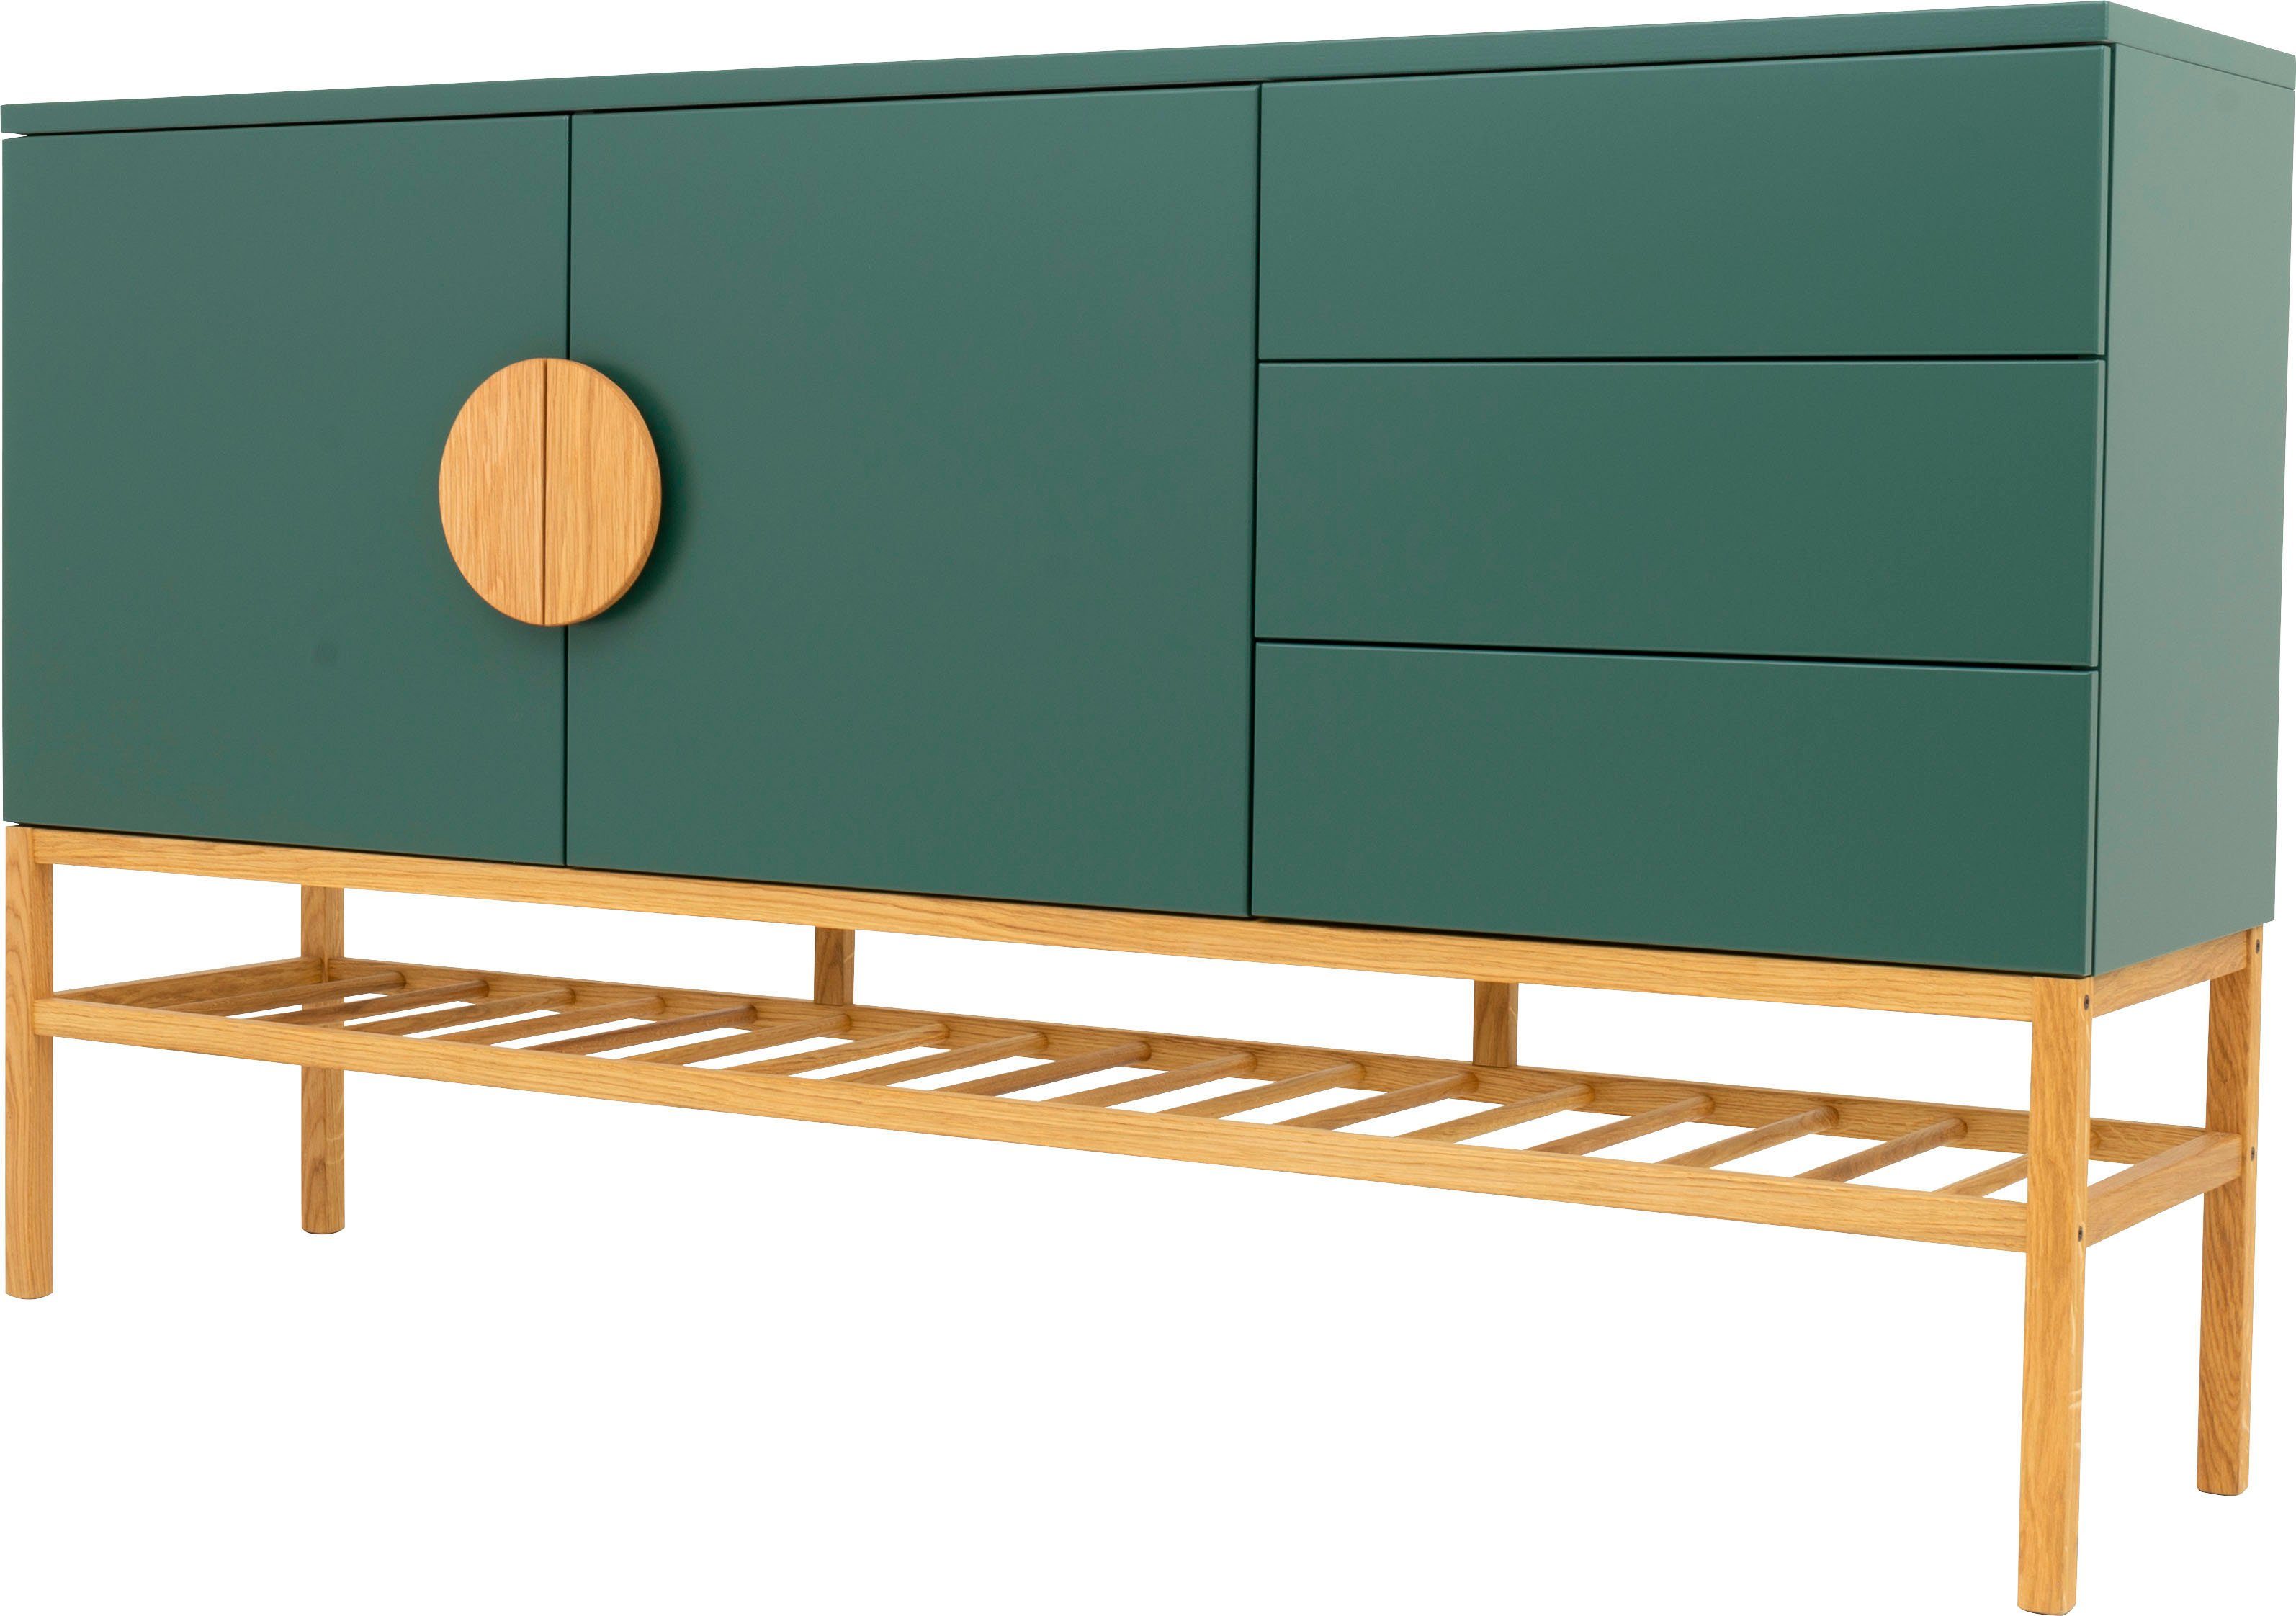 Tenzo - trendige Möbel im angesagten schwedischen Design